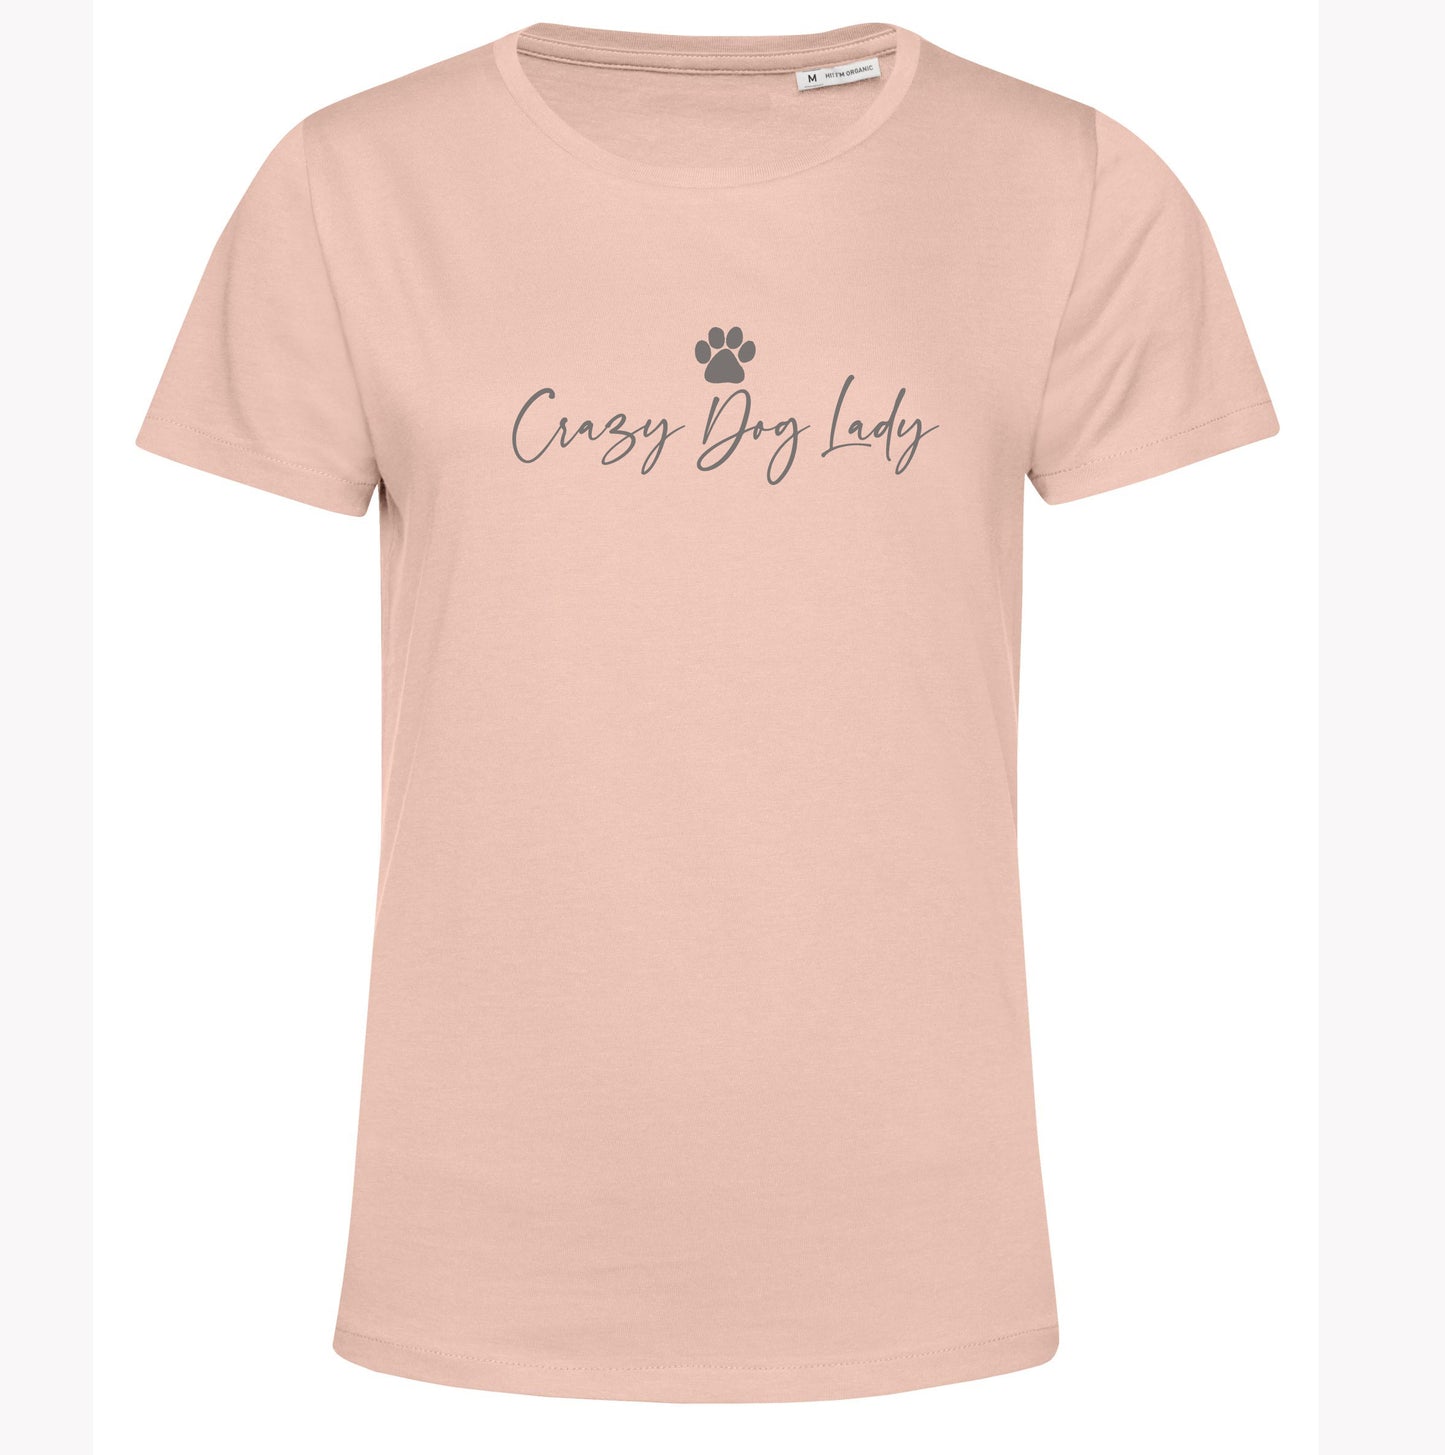 Organic Cotton T Shirt Crazy Dog Lady